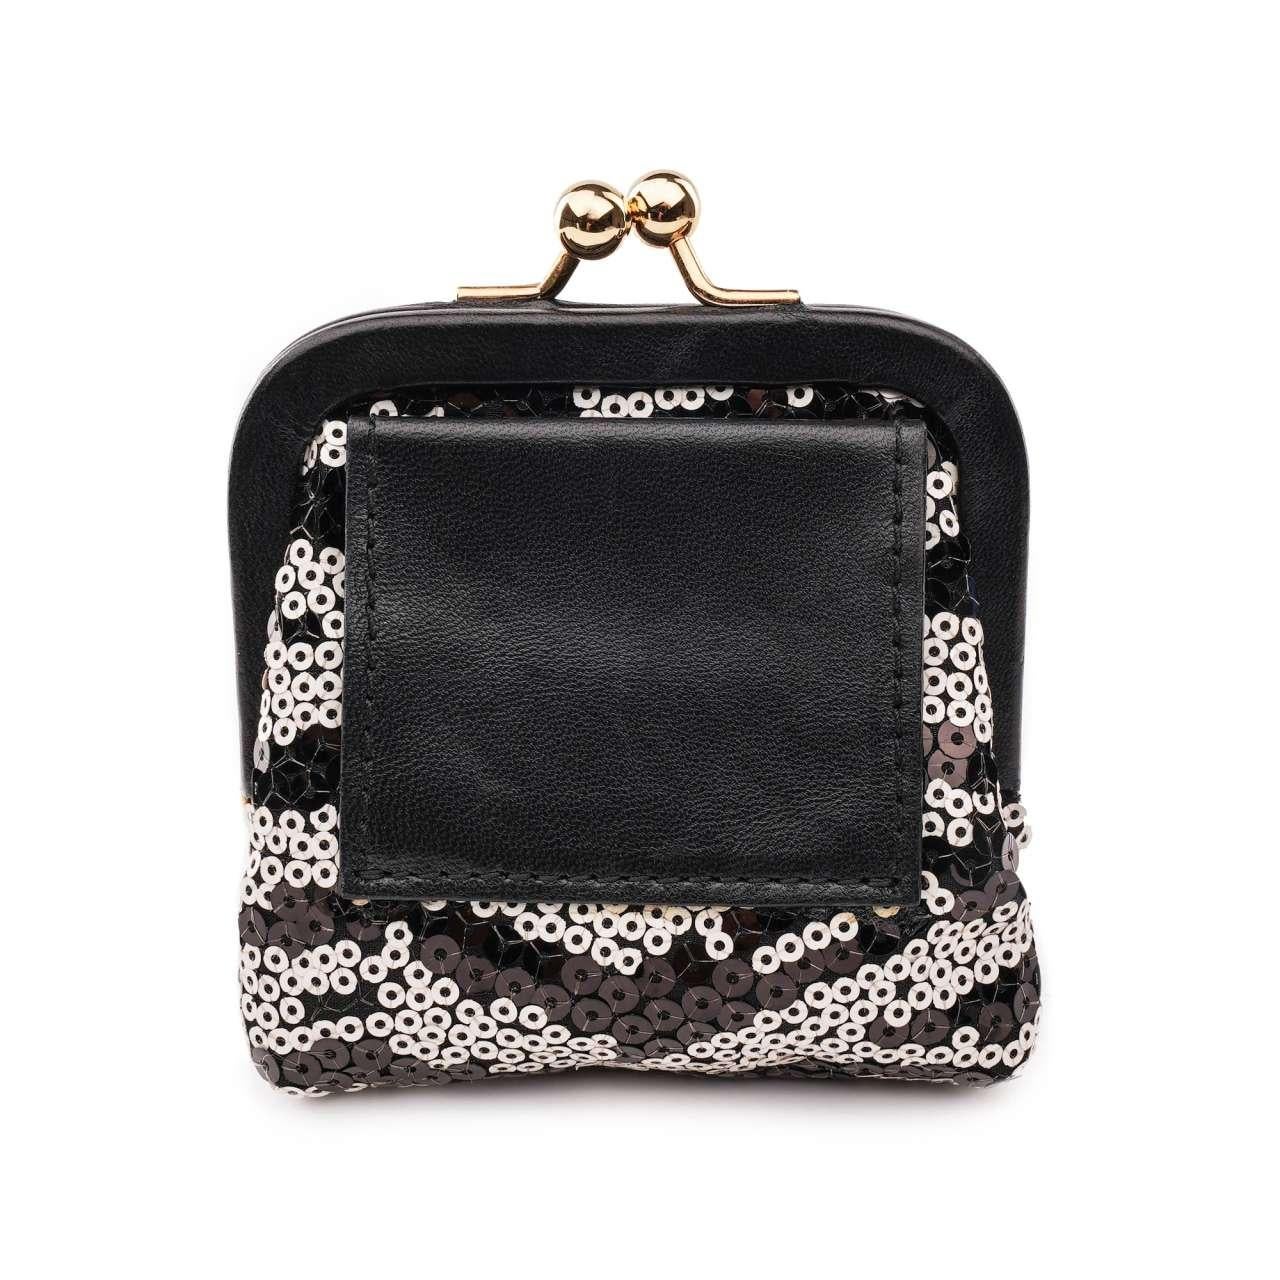 Dolce & Gabbana - Zebra Sequin Belt Clutch Purse Bag Black White In Excellent Condition For Sale In Erkrath, DE